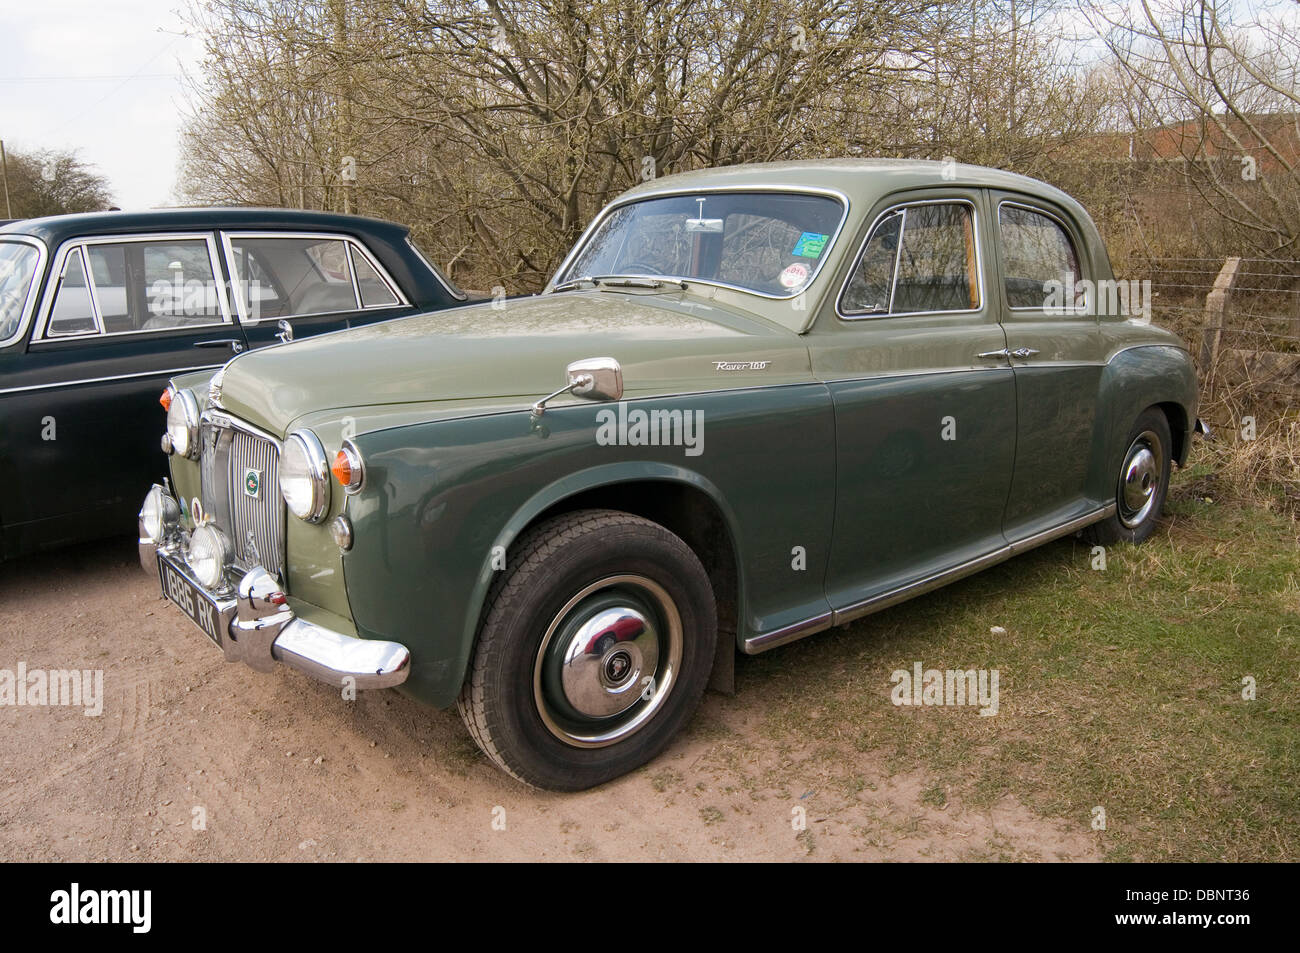 Viejos autos ingleses fotografías e imágenes de alta resolución - Alamy